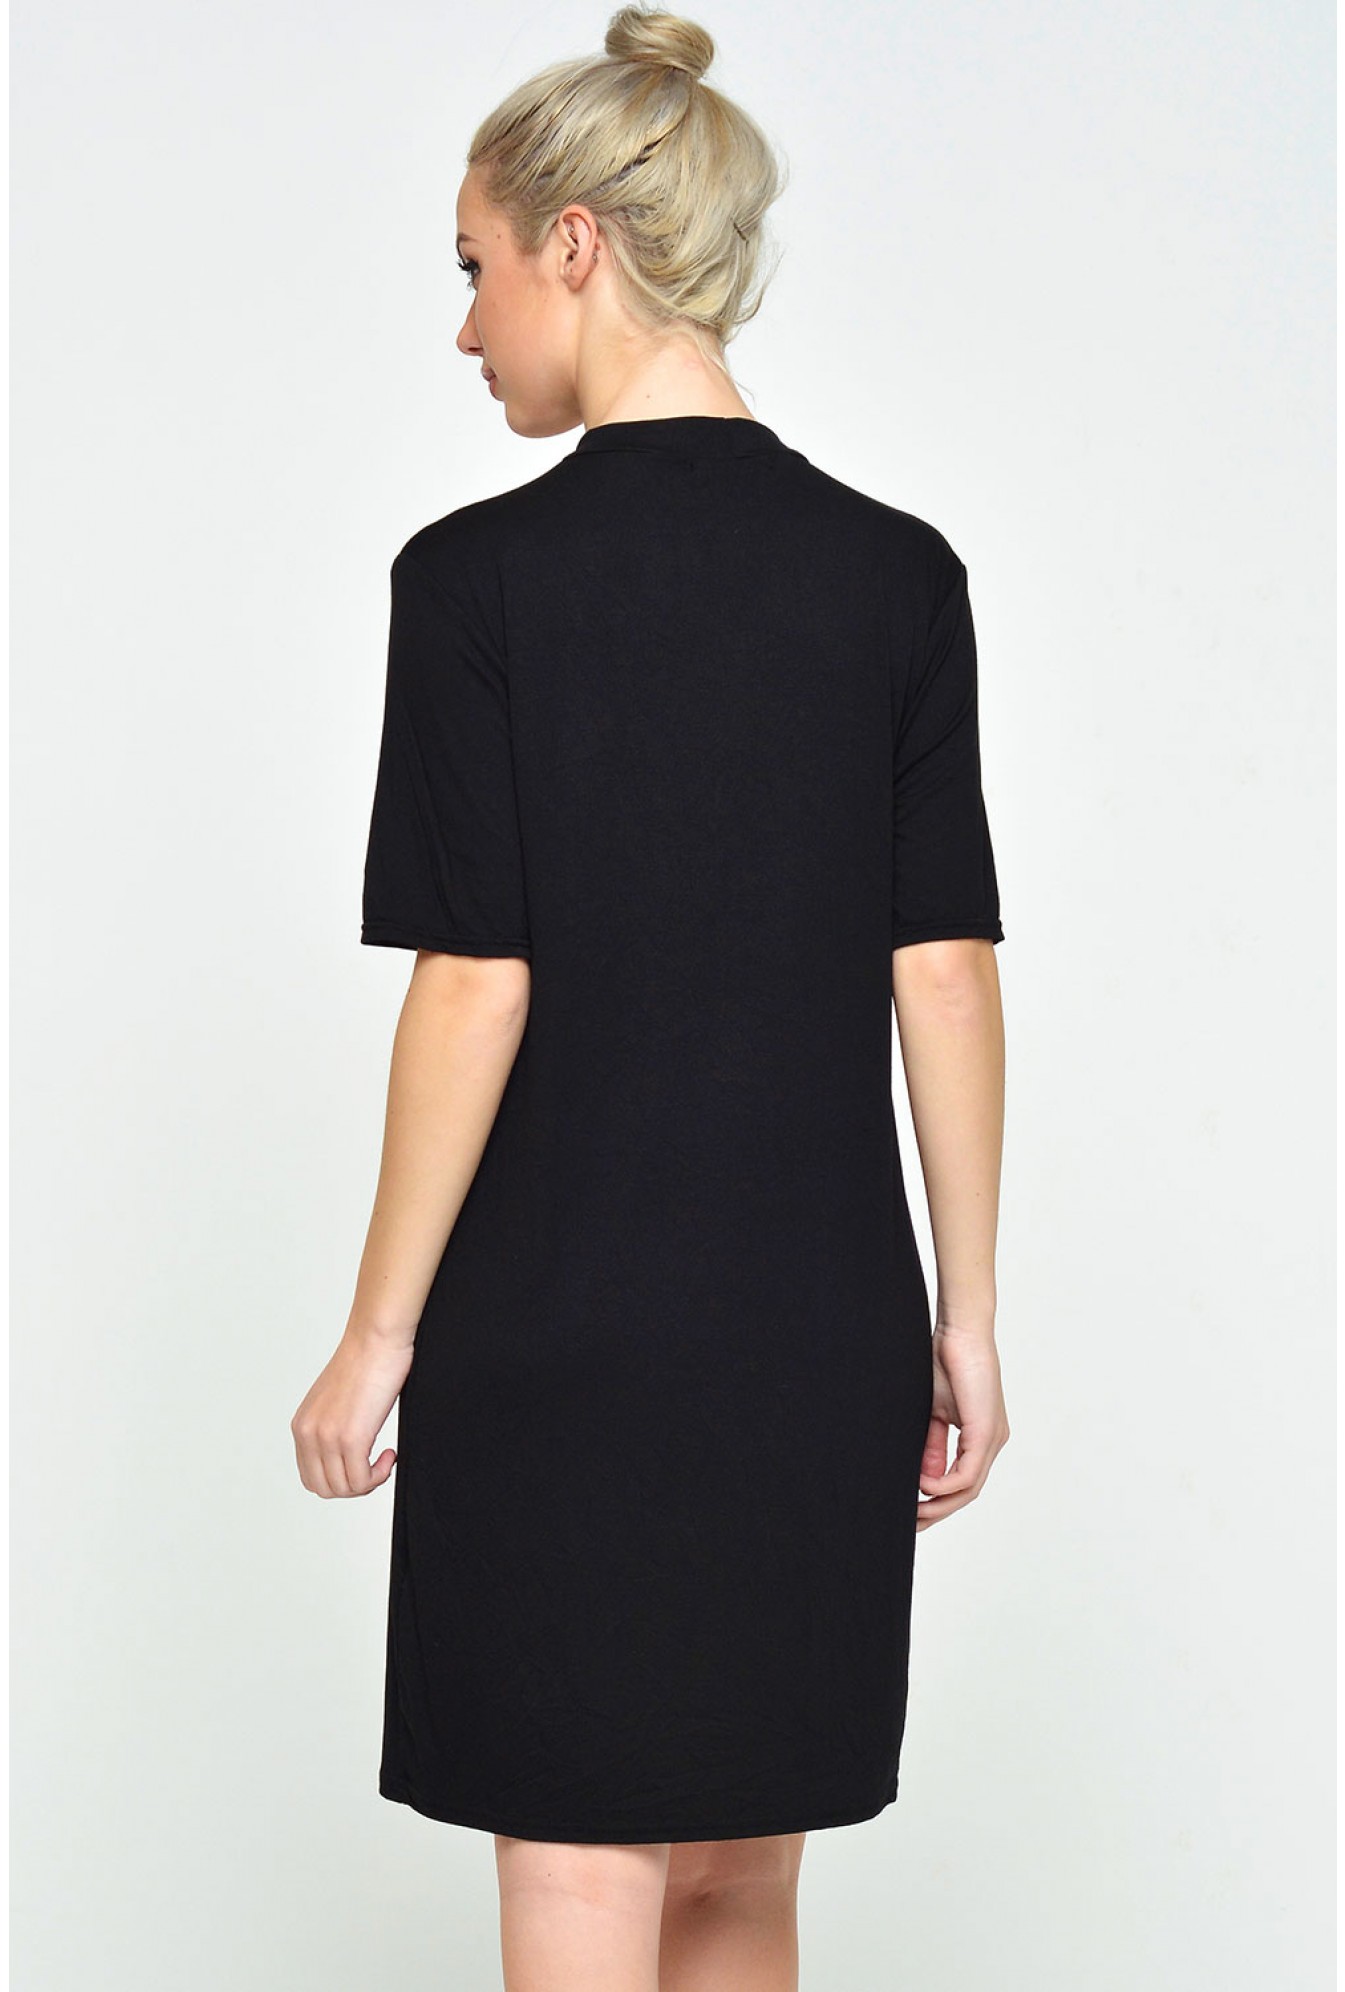 Signature Zara Cut Out Neck Dark Angel Dress in Black | iCLOTHING